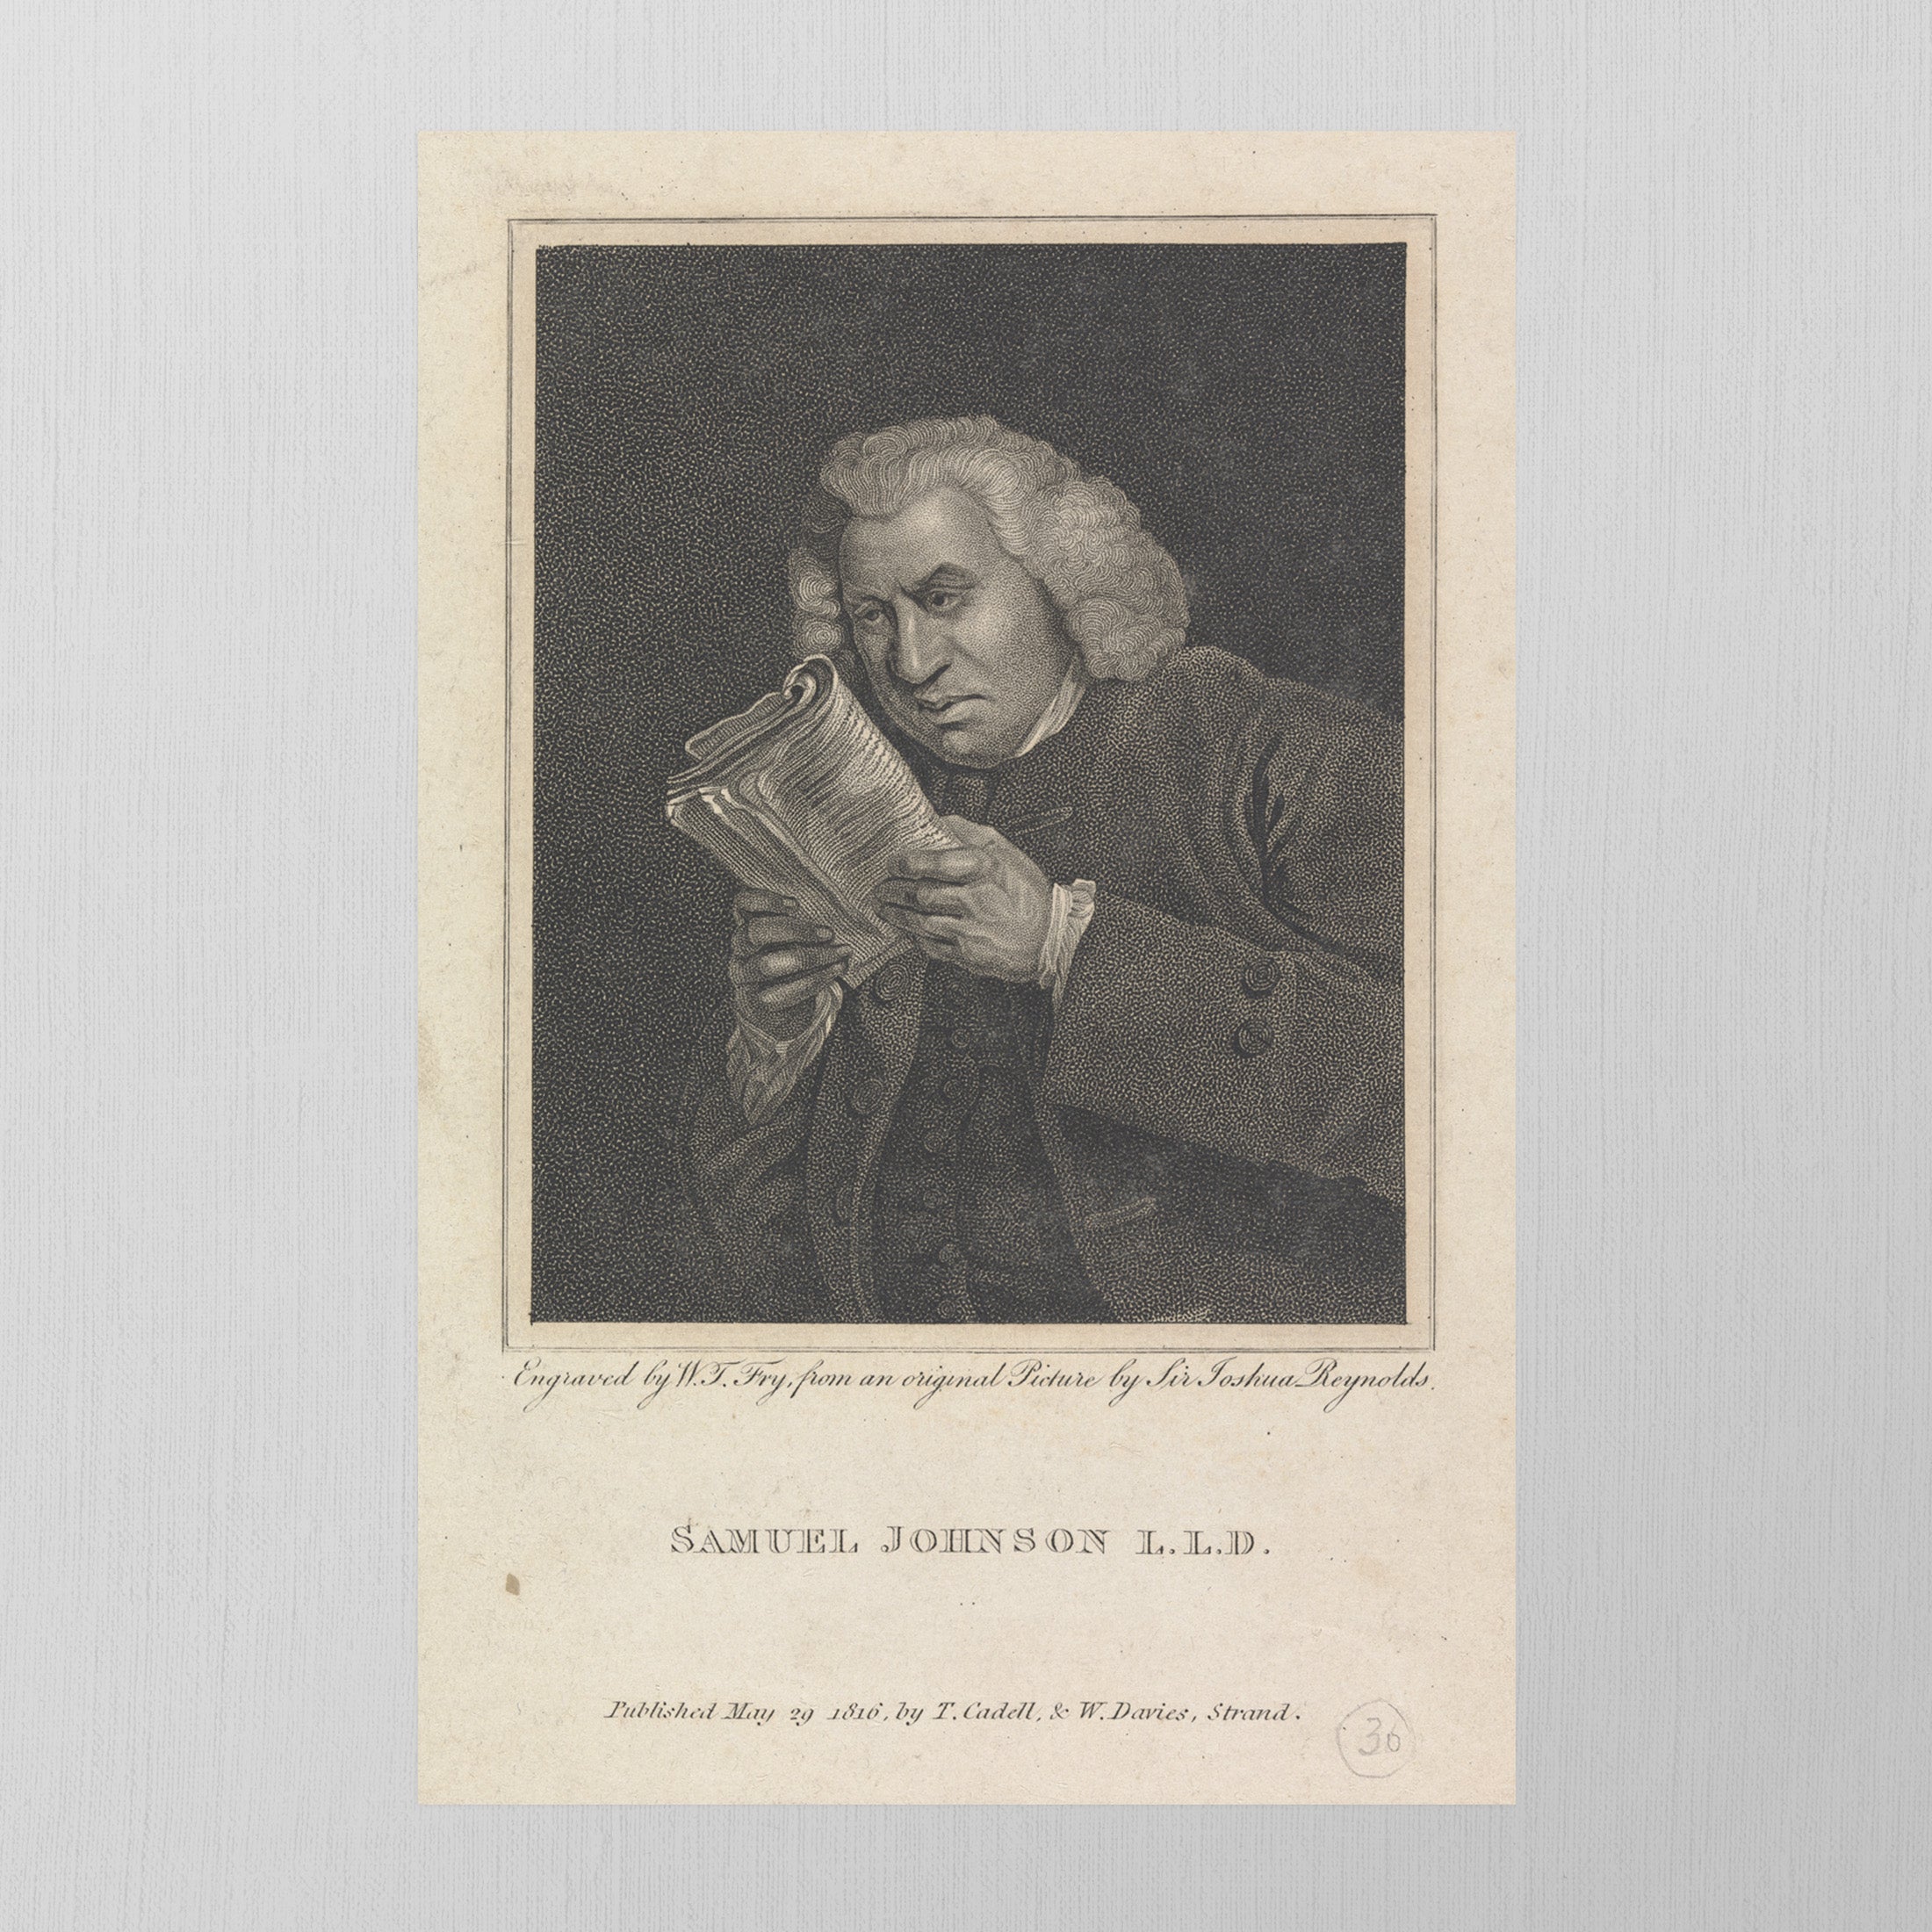 Samuel Johnson LLD by Wiliam Thomas Fry, 1816